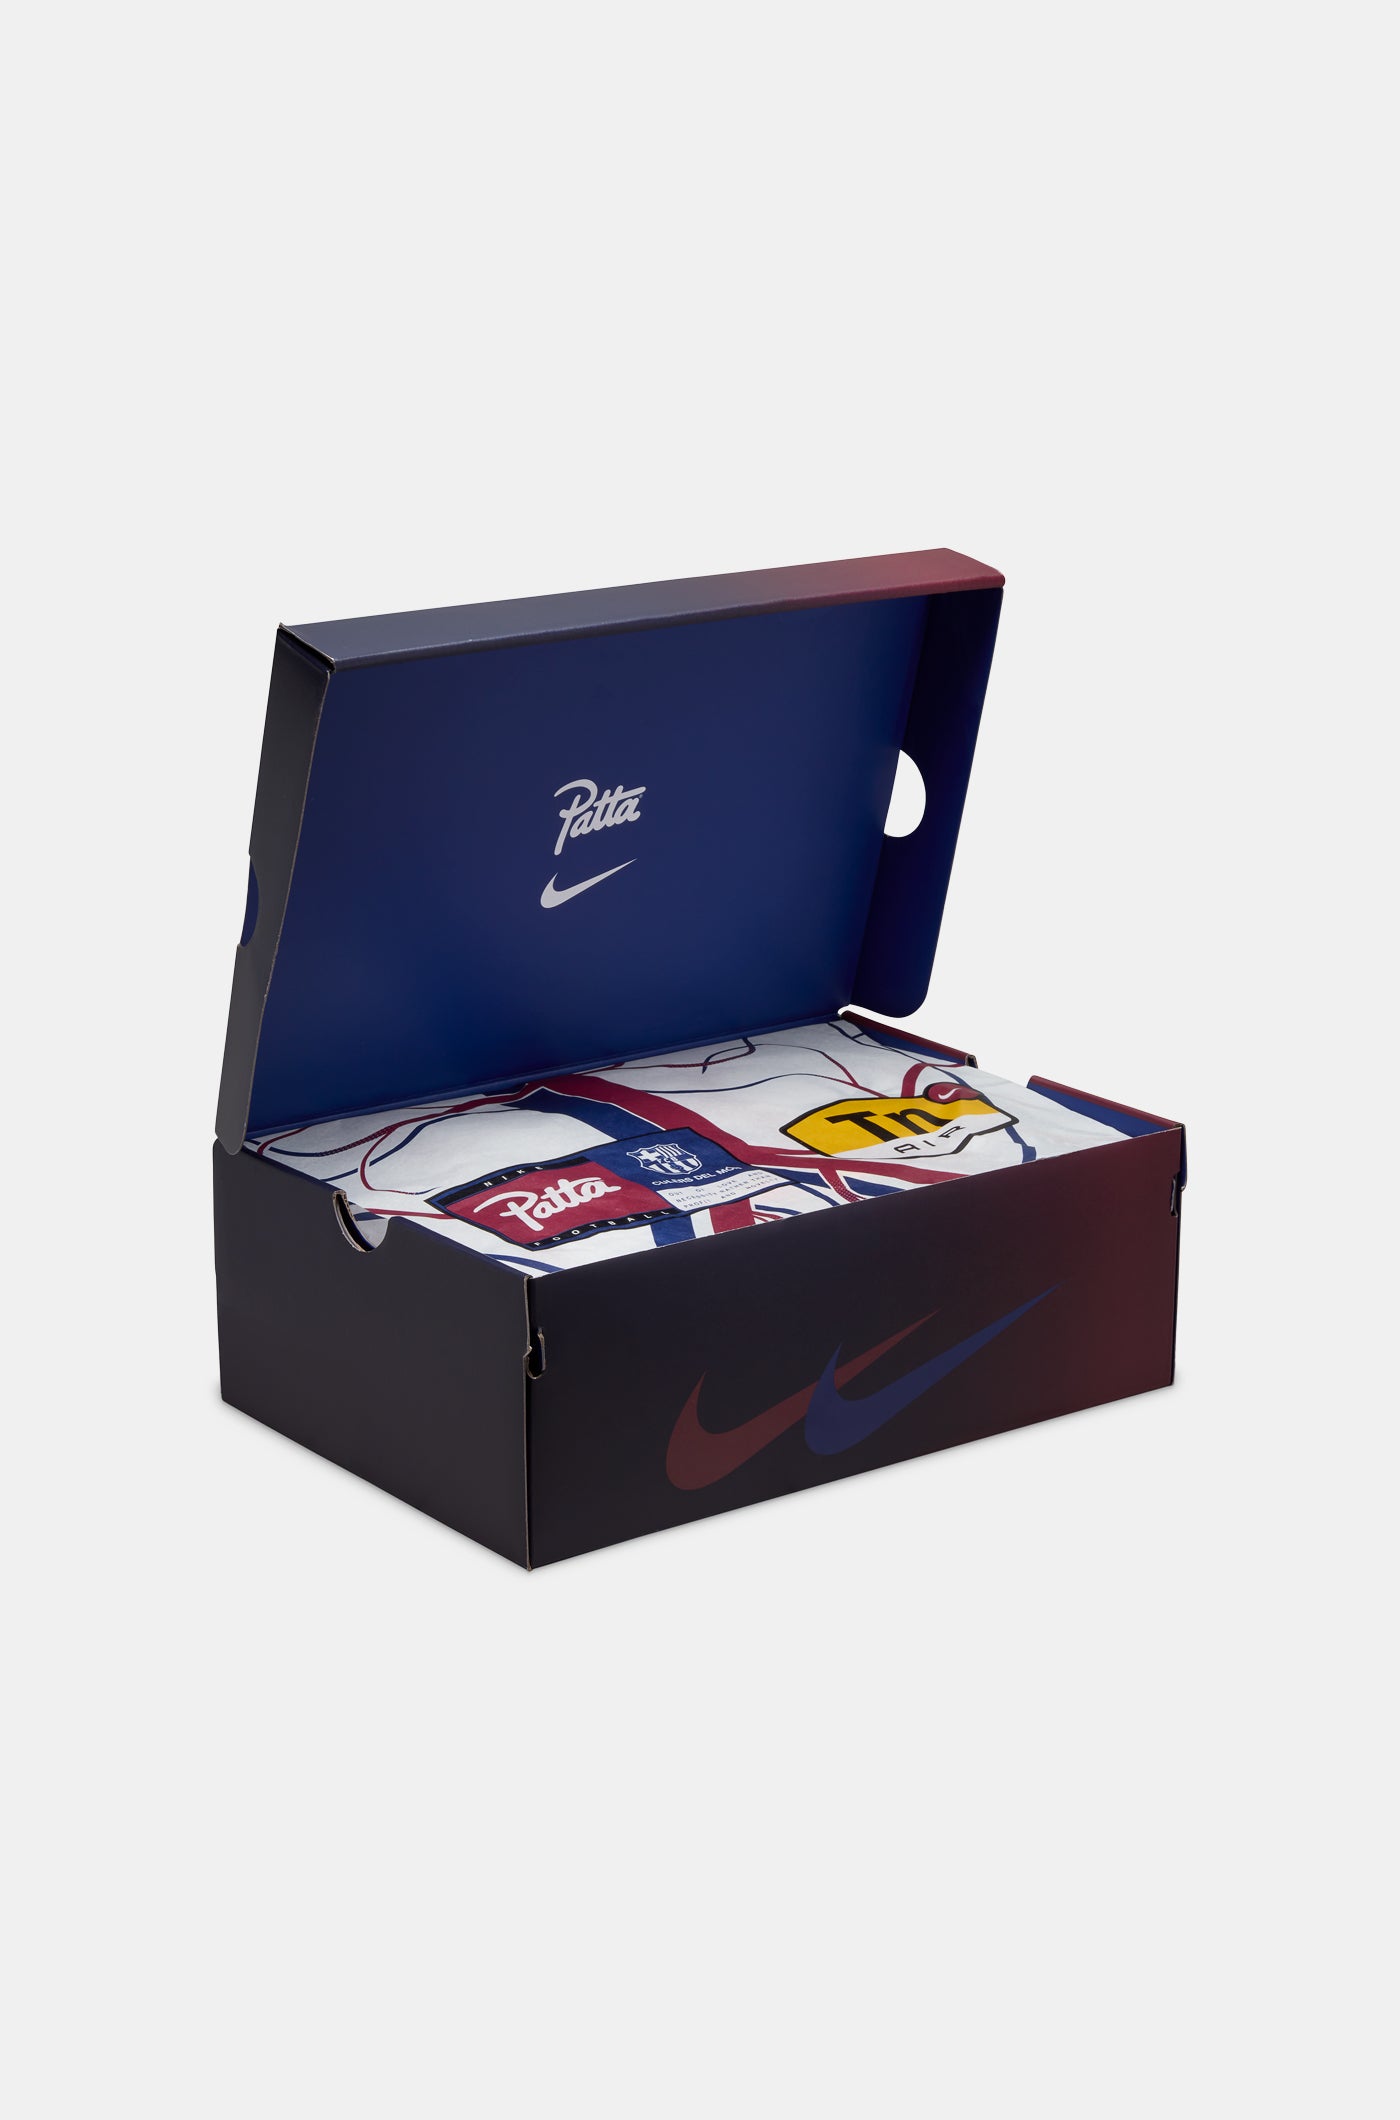 Sneakers "Barça x Patta" Nike Air Max Plus